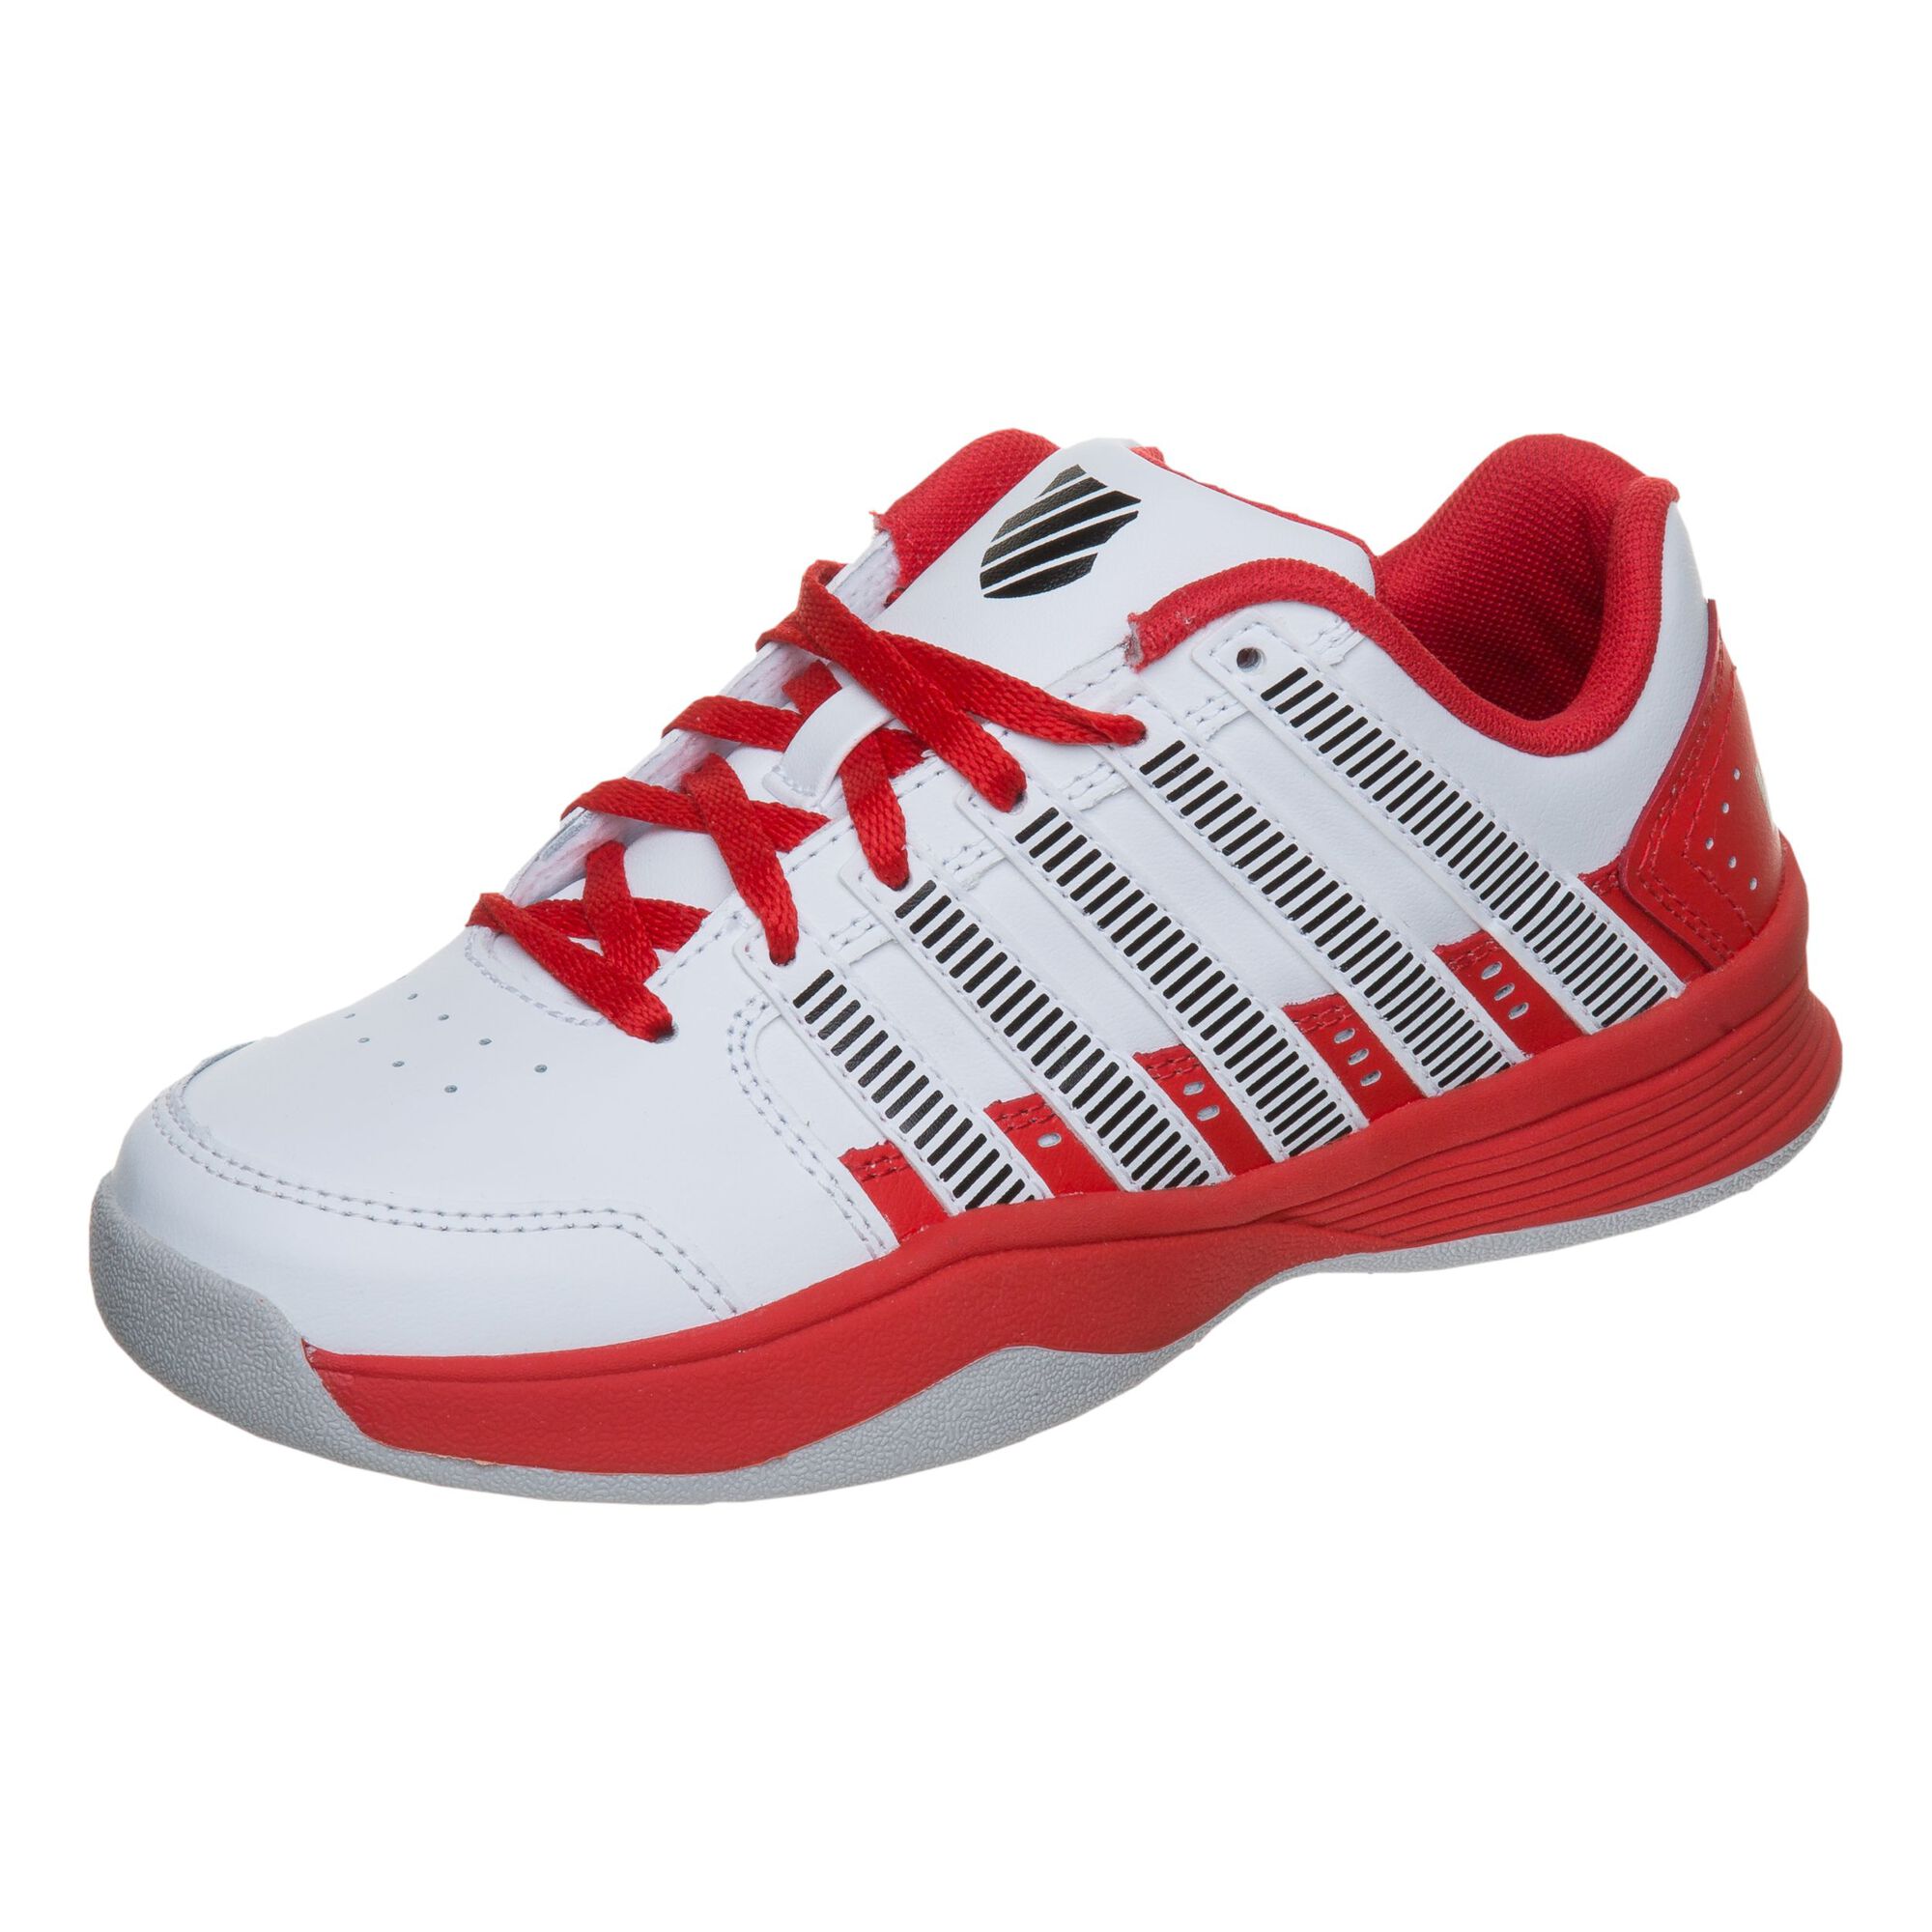 jongen Impasse Oorlogsschip buy K-Swiss Court Impact Leather Carpet Shoe Kids - White, Red online |  Tennis-Point